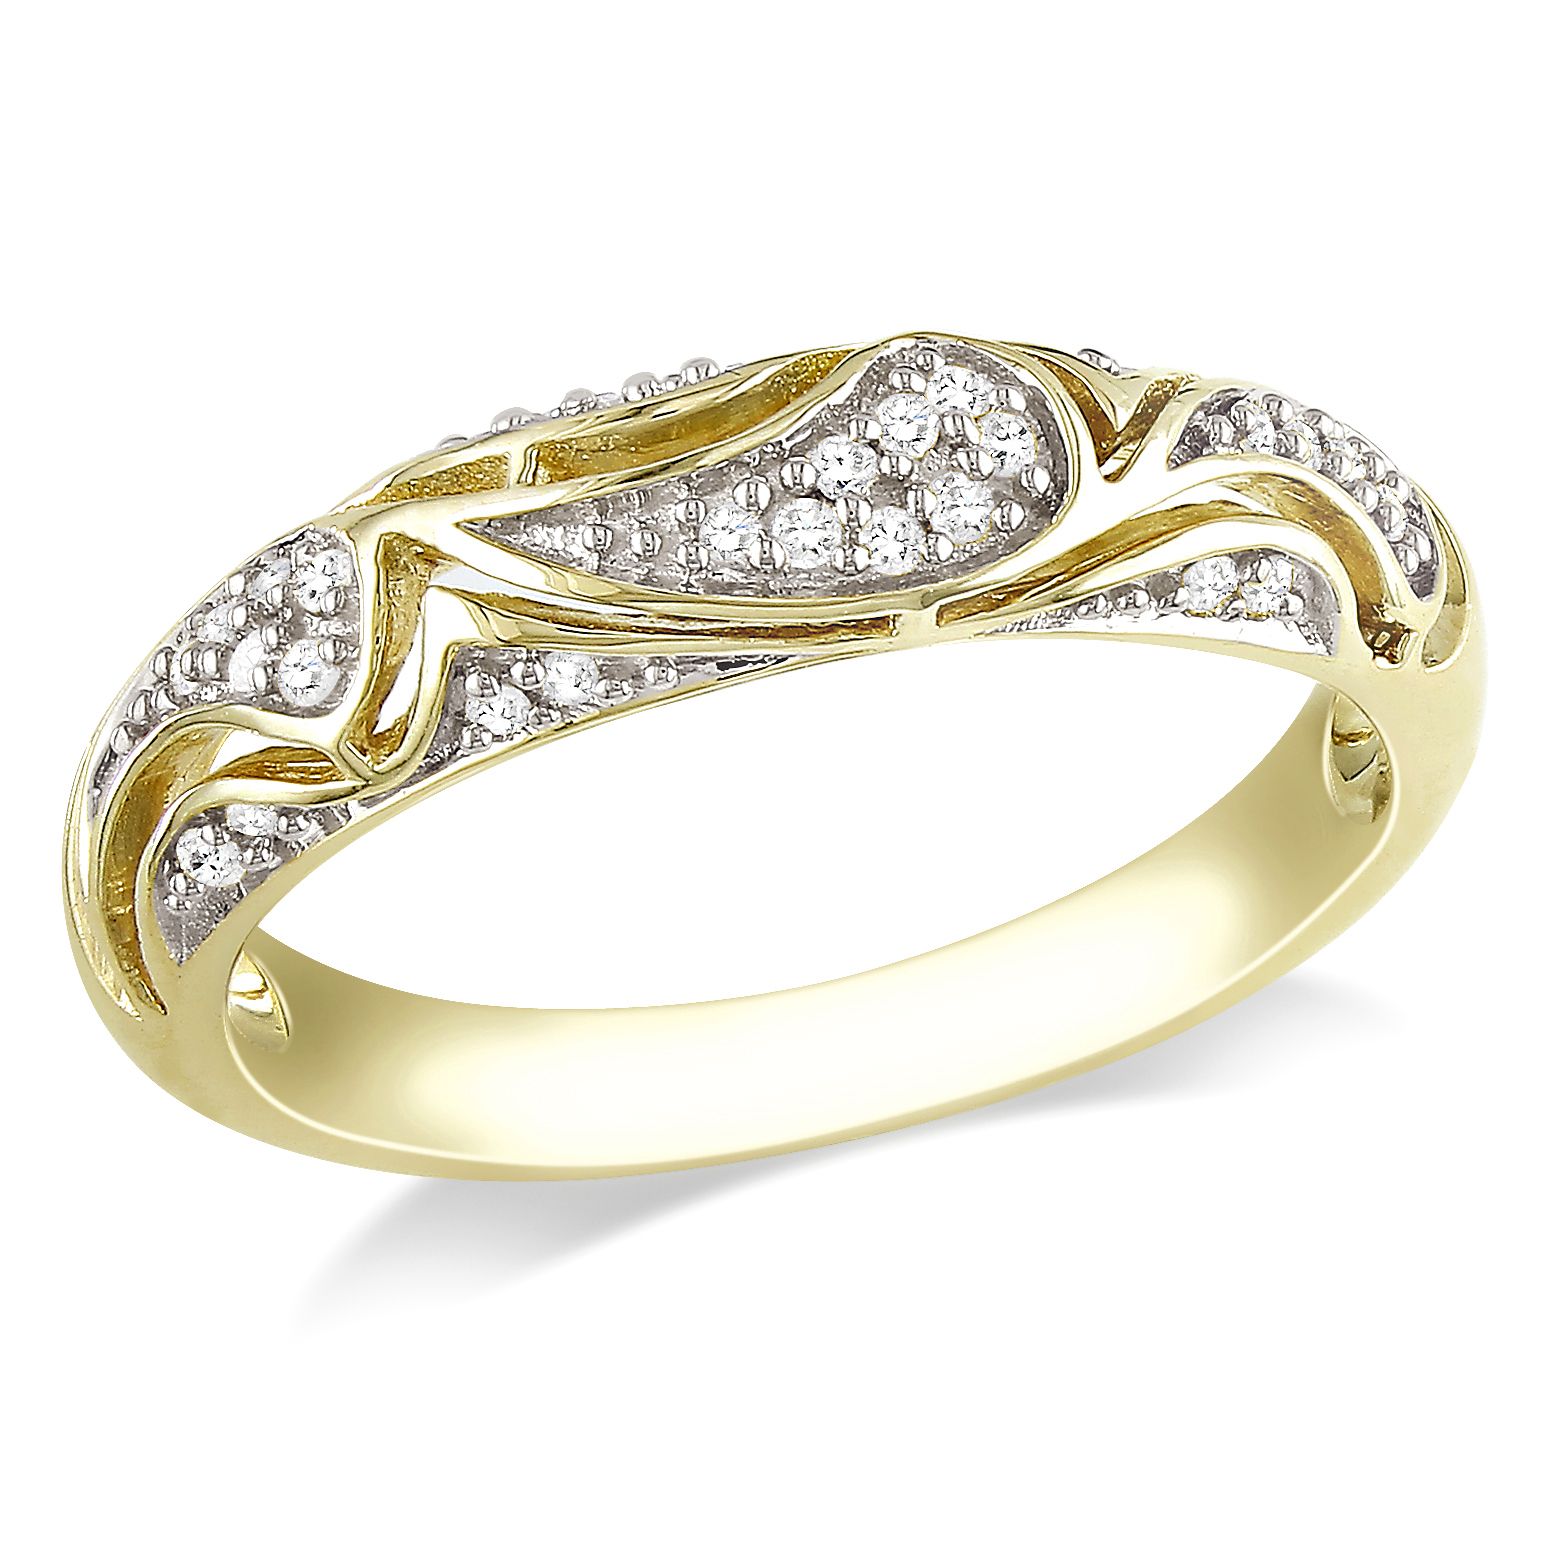 1/10 CTTW Diamond Fashion Ring Set in 10K Yellow Gold (GH I2;I3)